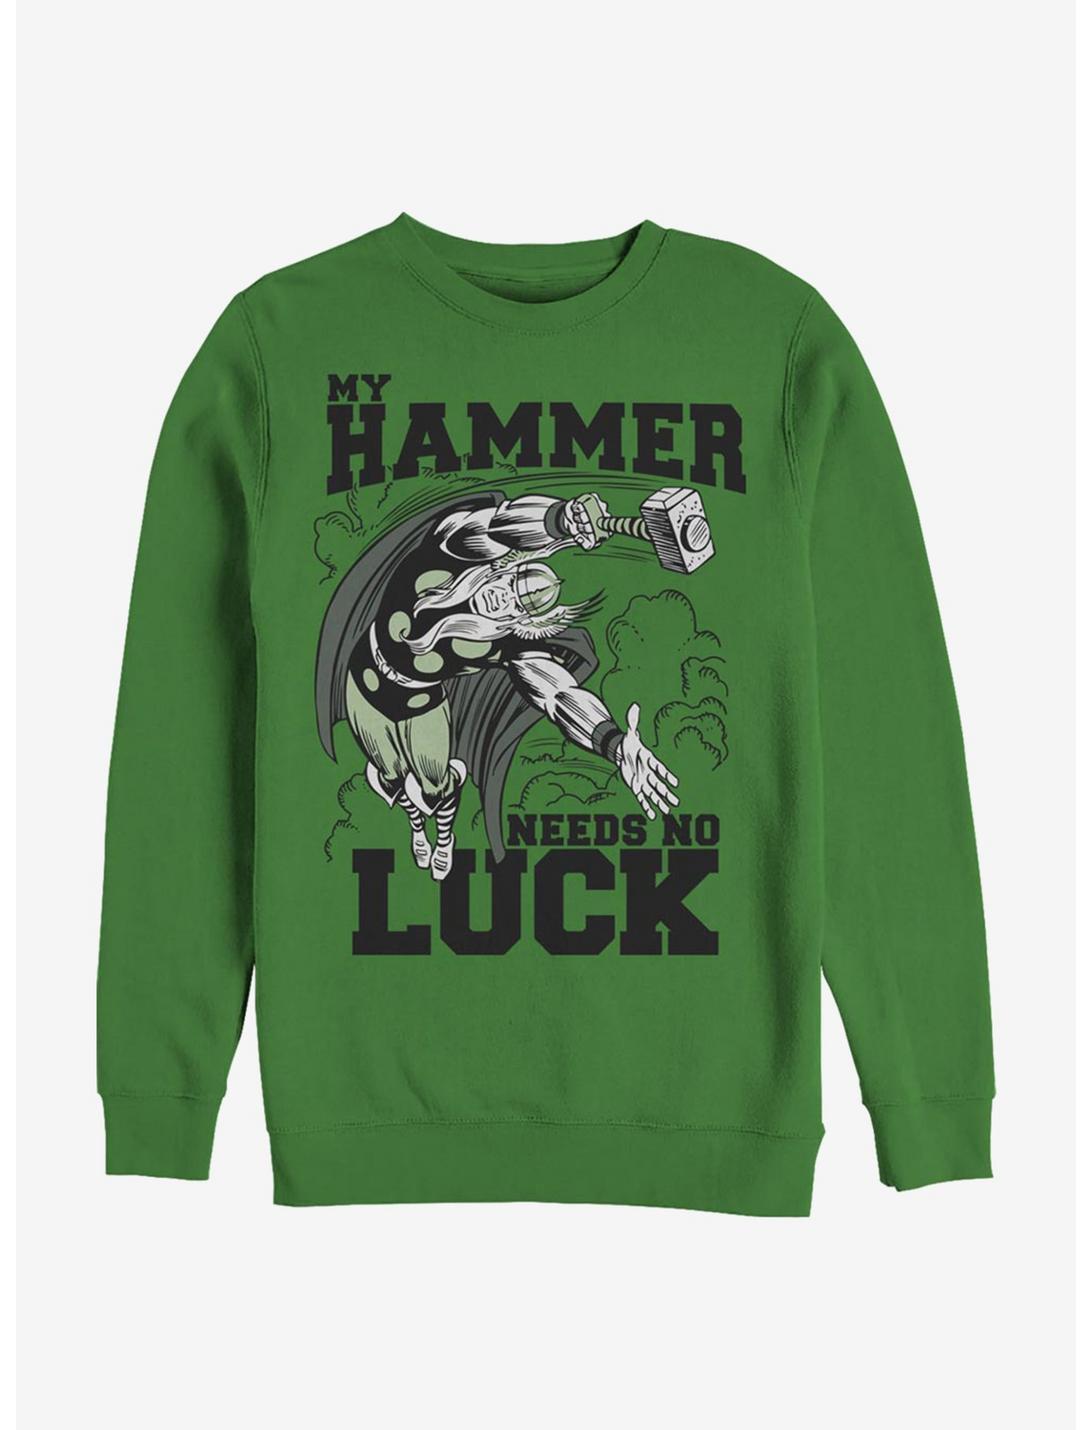 Marvel Thor Hammer Luck Crew Sweatshirt, KELLY, hi-res